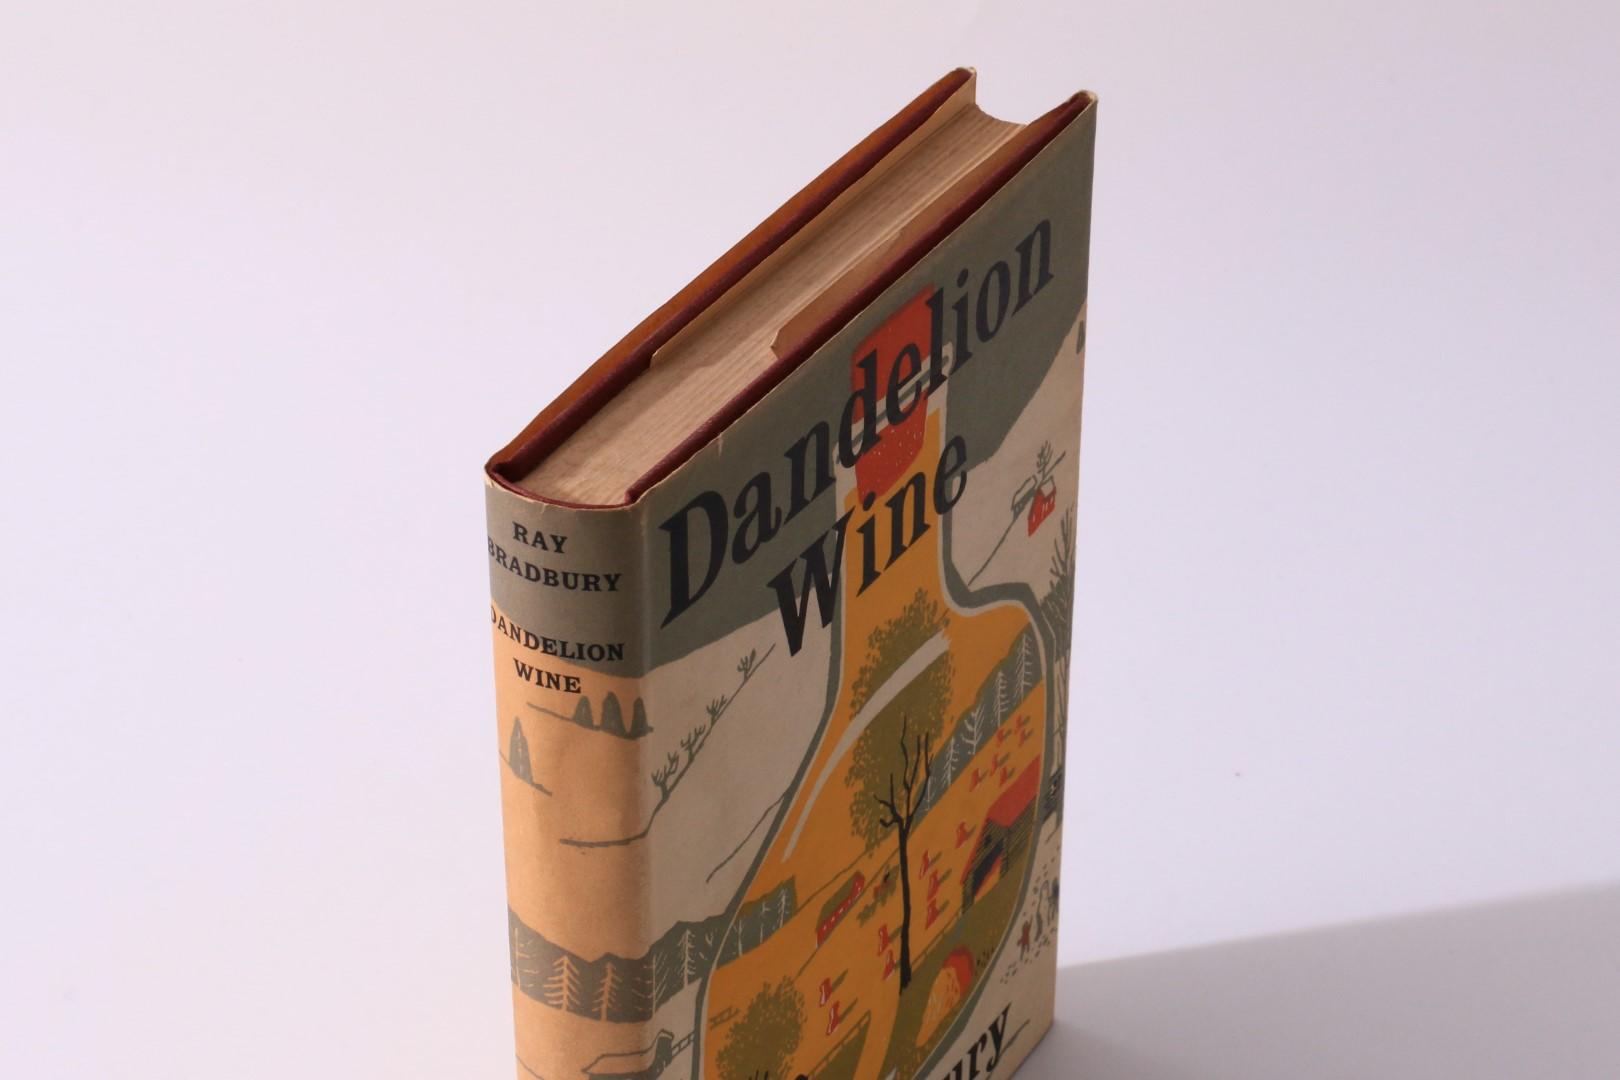 Ray Bradbury - Dandelion Wine - Rupert Hart-Davis, 1957, First Edition.